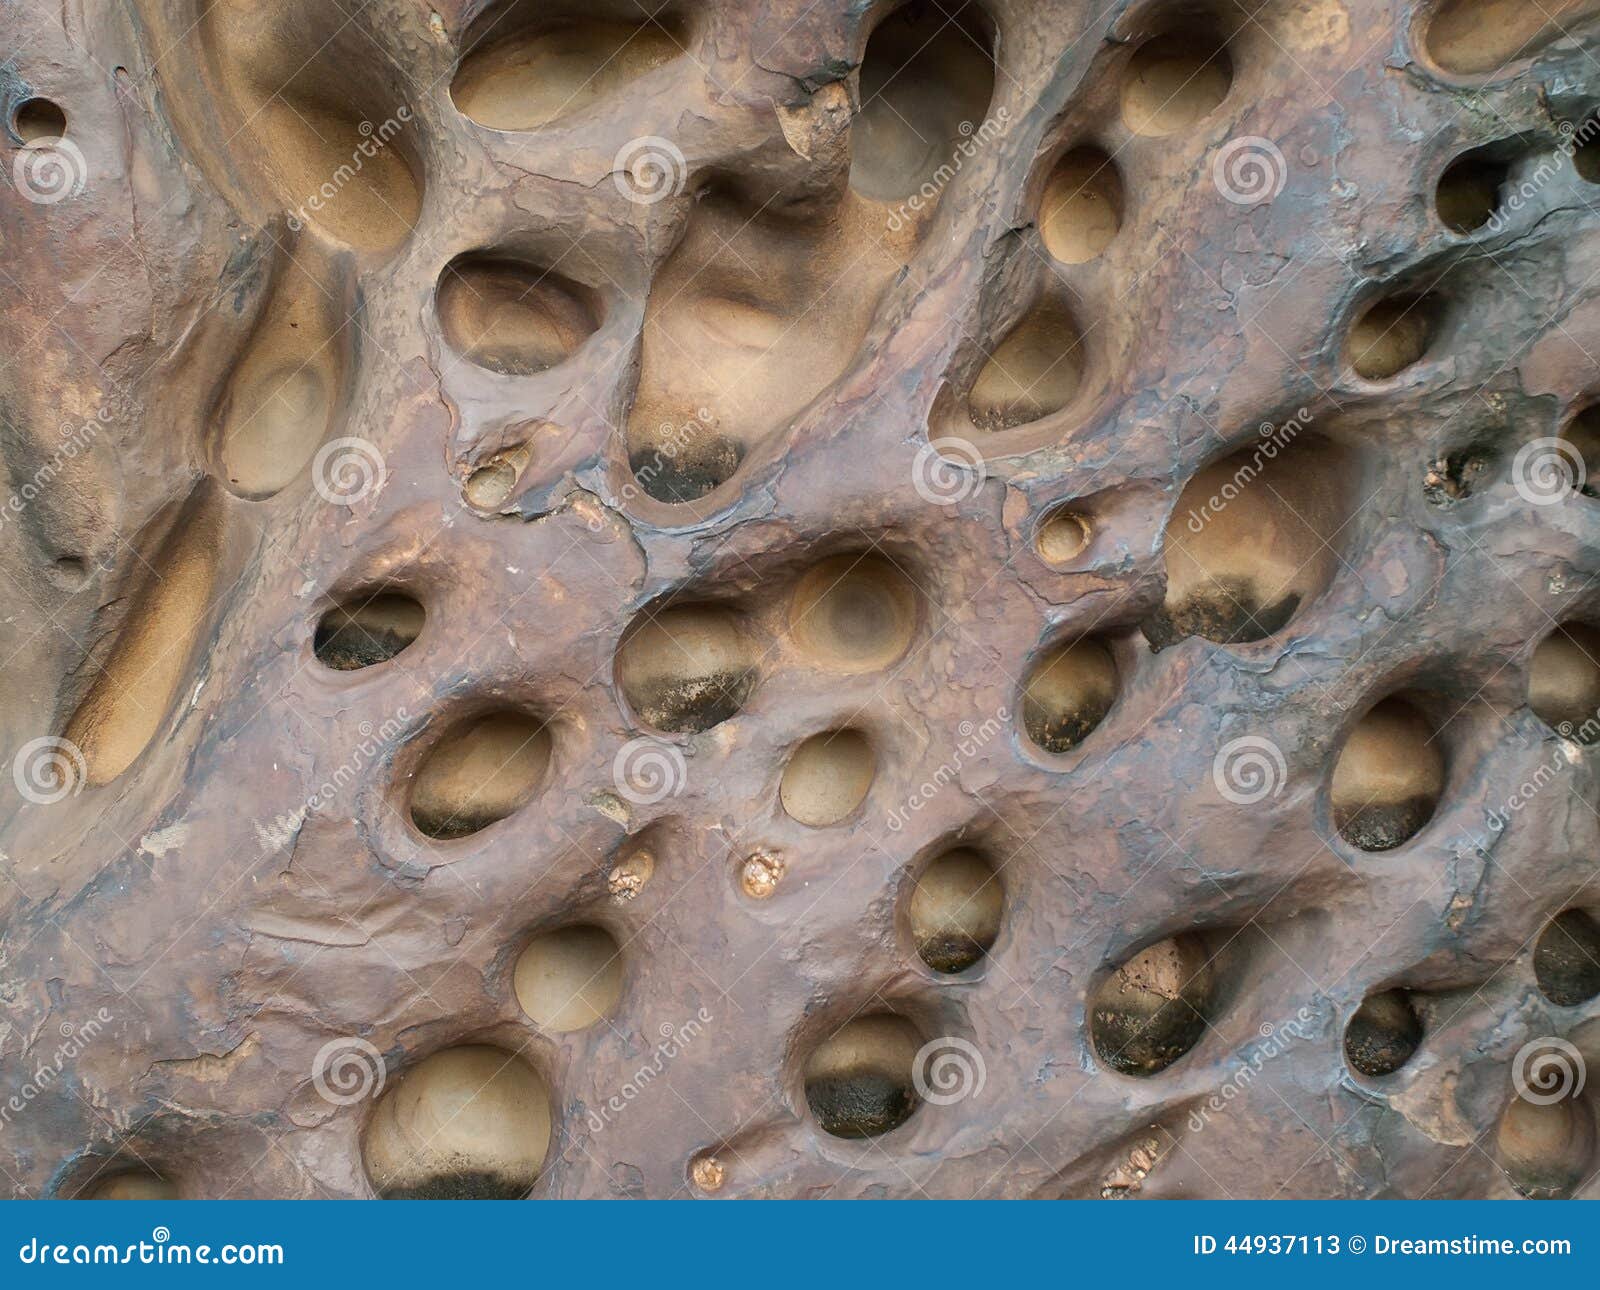 stones-holes-caused-water-erosion-44937113.jpg